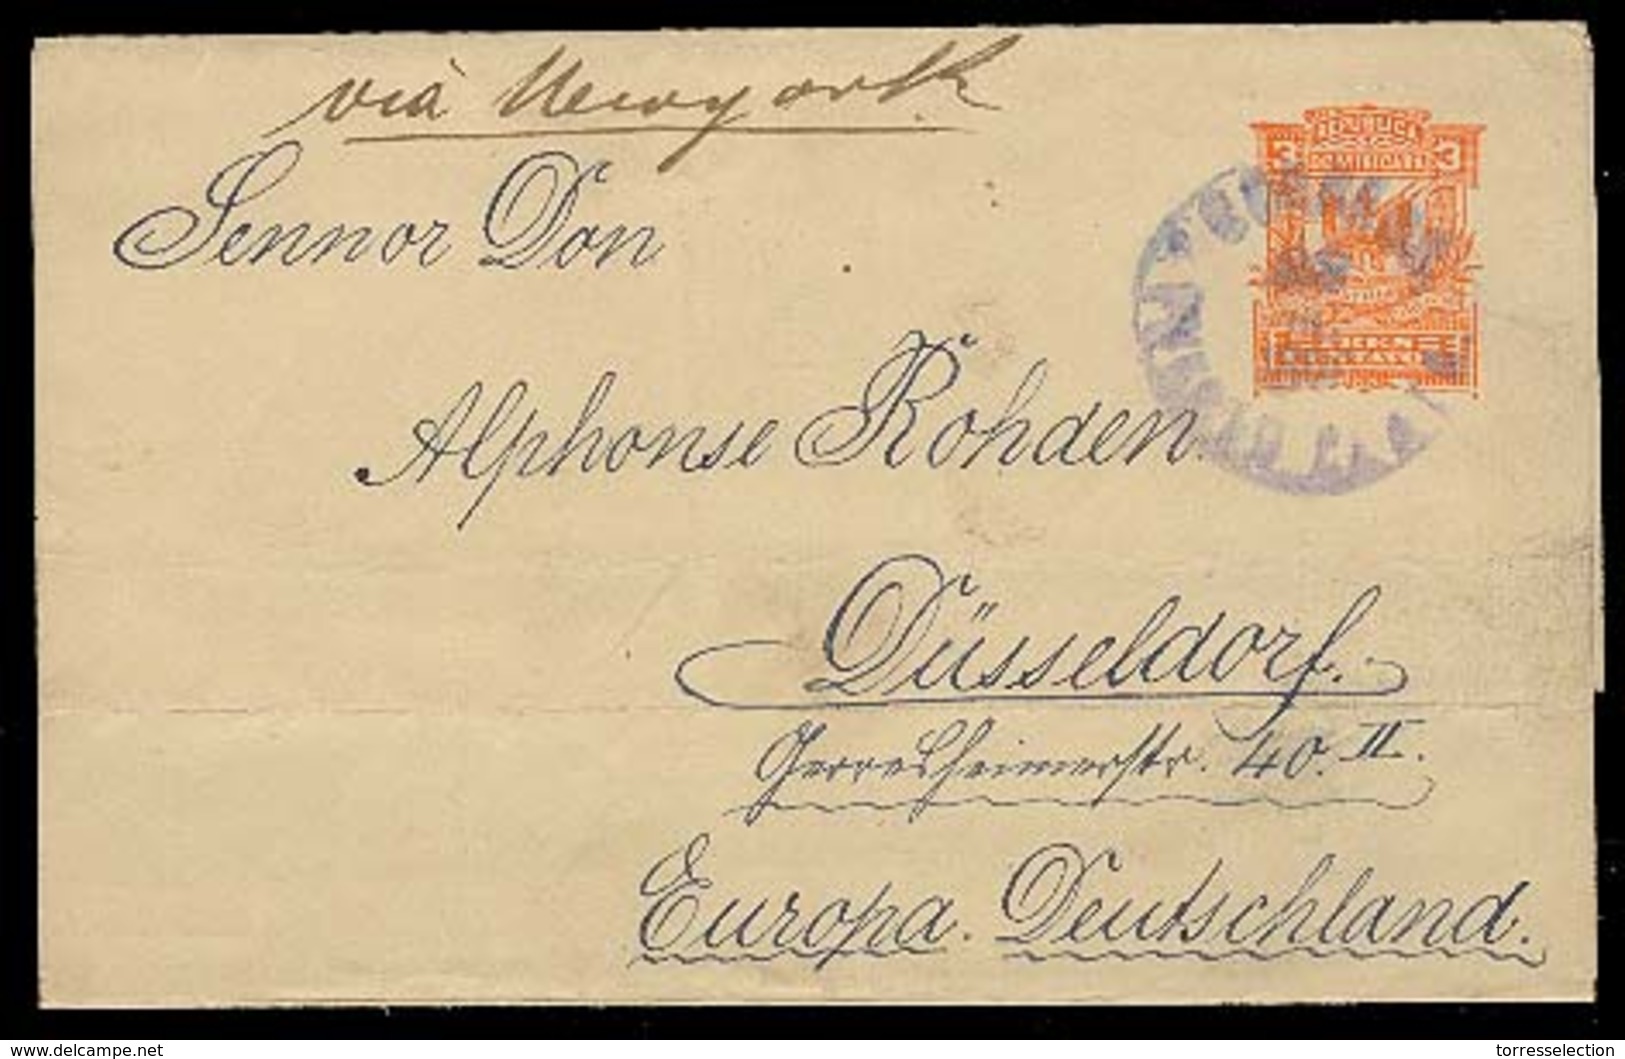 DOMINICAN REP. 1890. P. Plata - Germany. 3c Orange Stat Wrapper Complete Used. Scarce. - Dominican Republic